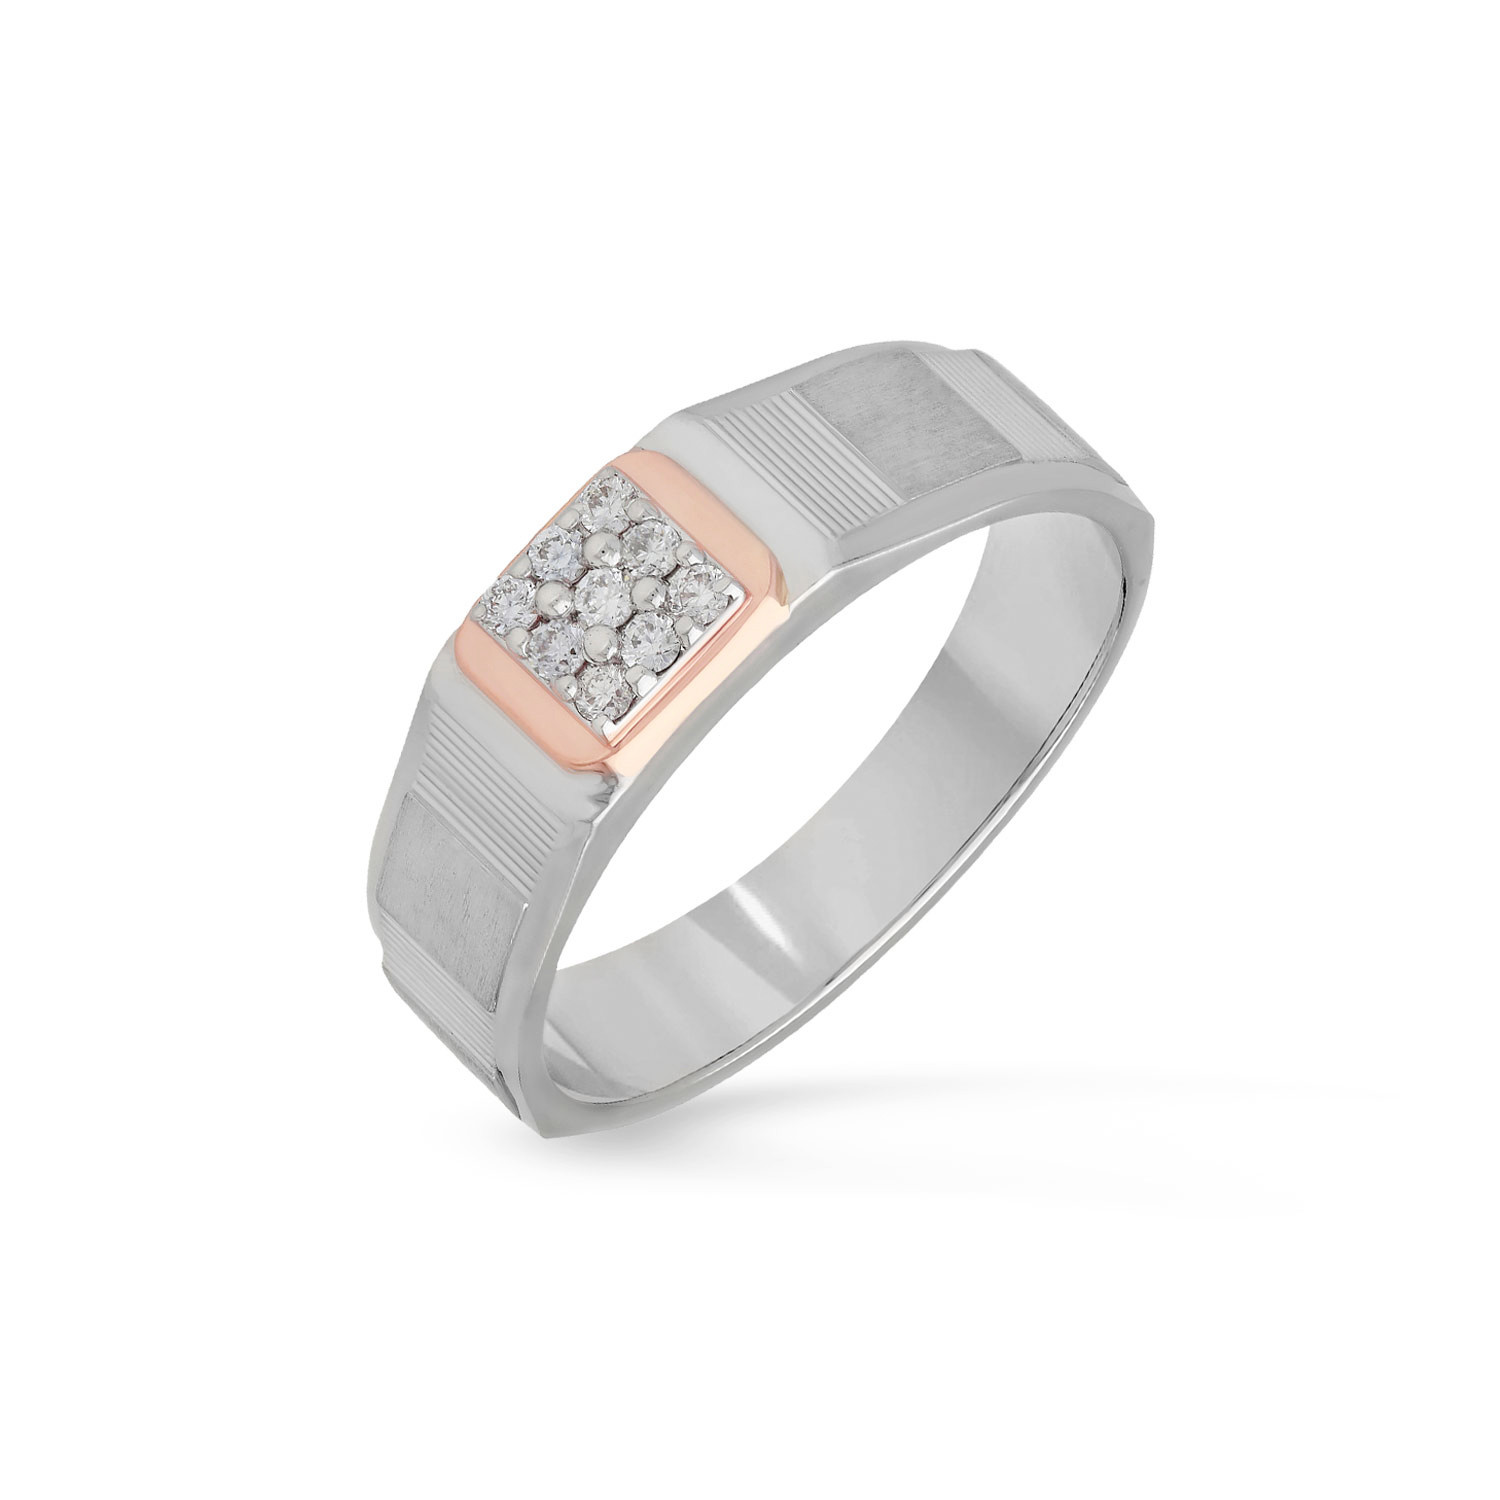 Tiffany Launches Men's Diamond Engagement Rings